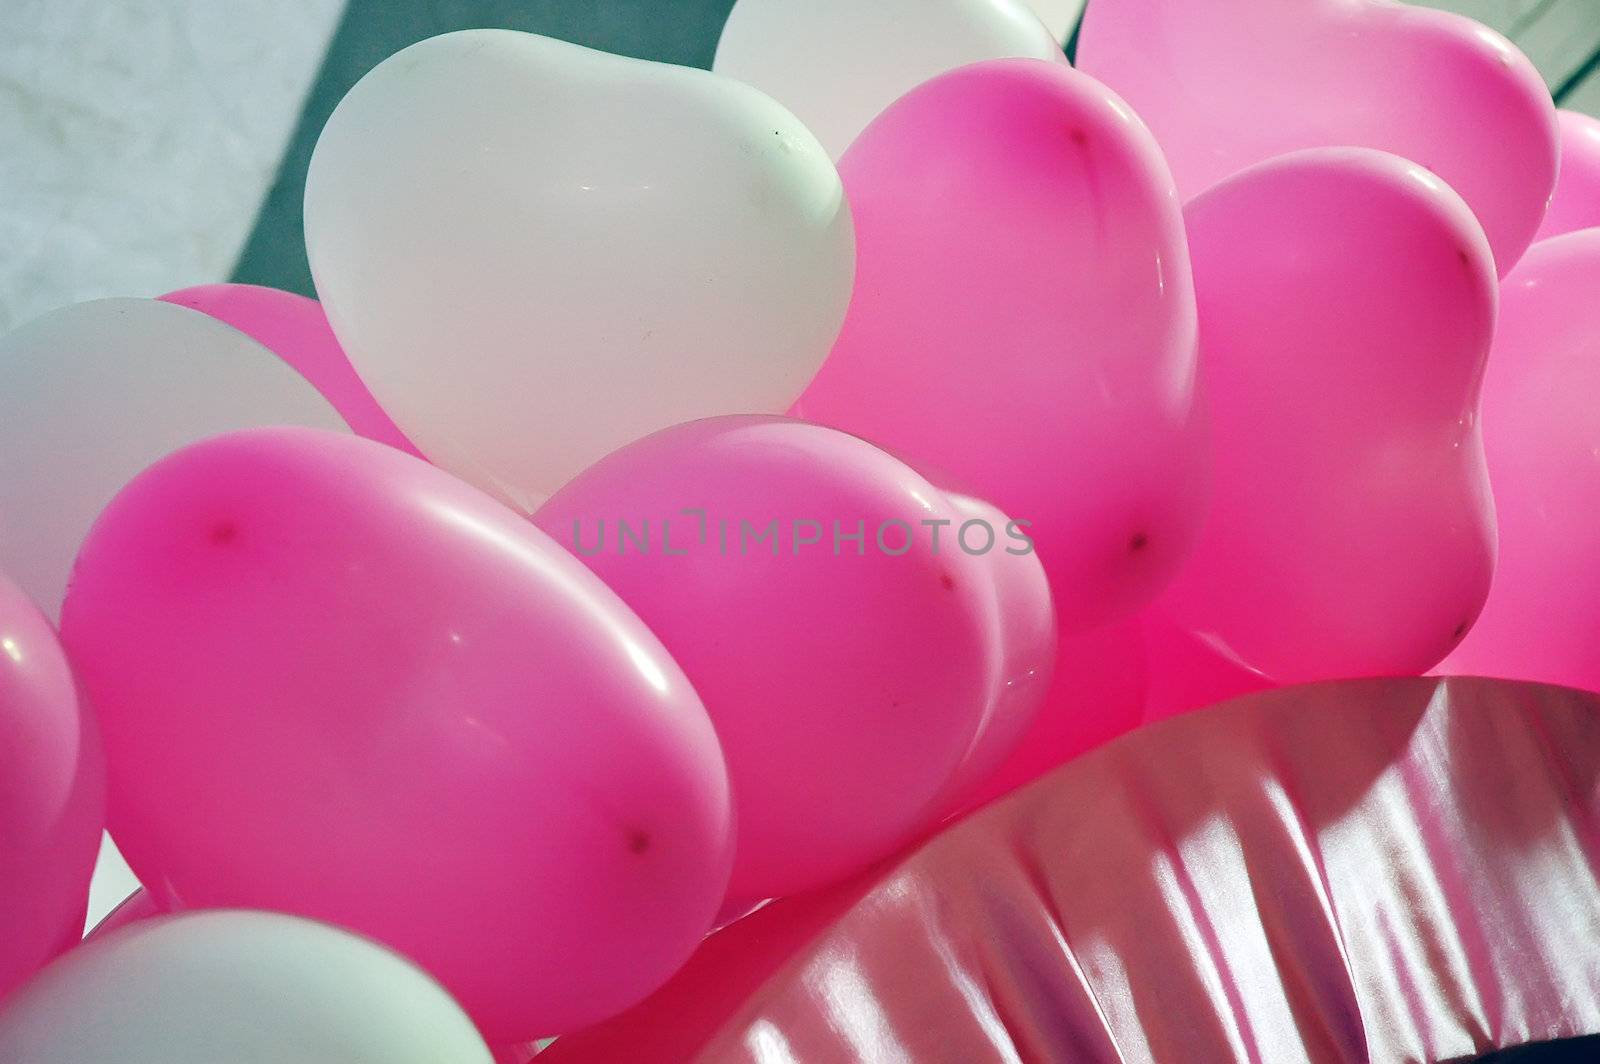 Balloons row